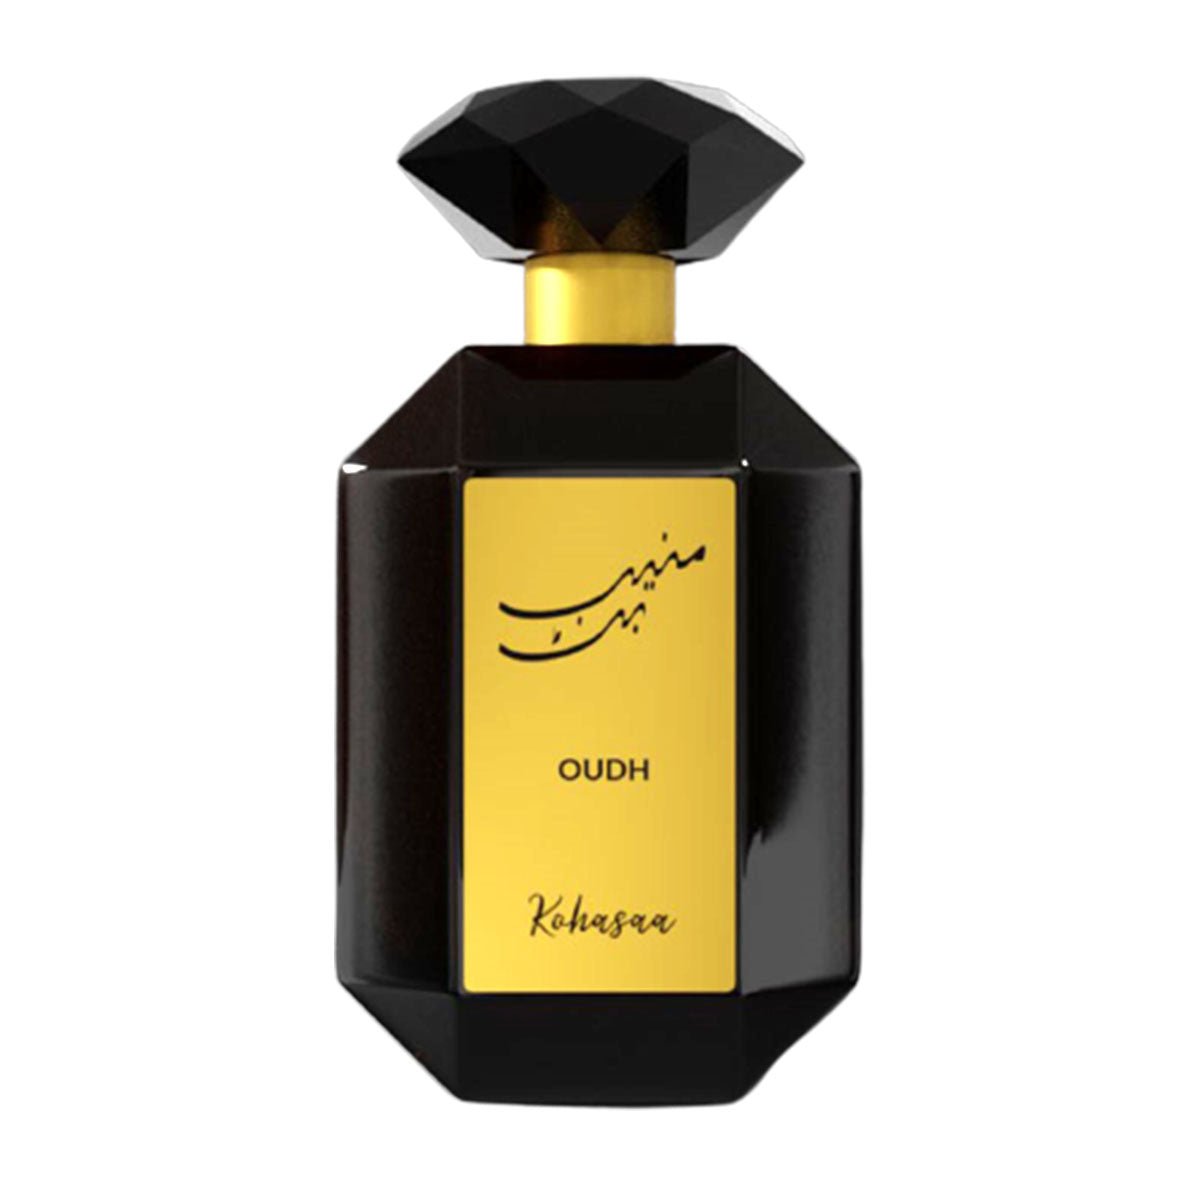 Kohasaa Muneeb Butt Oudh Edp For Men 100 ml-Perfume - AllurebeautypkKohasaa Muneeb Butt Oudh Edp For Men 100 ml-Perfume